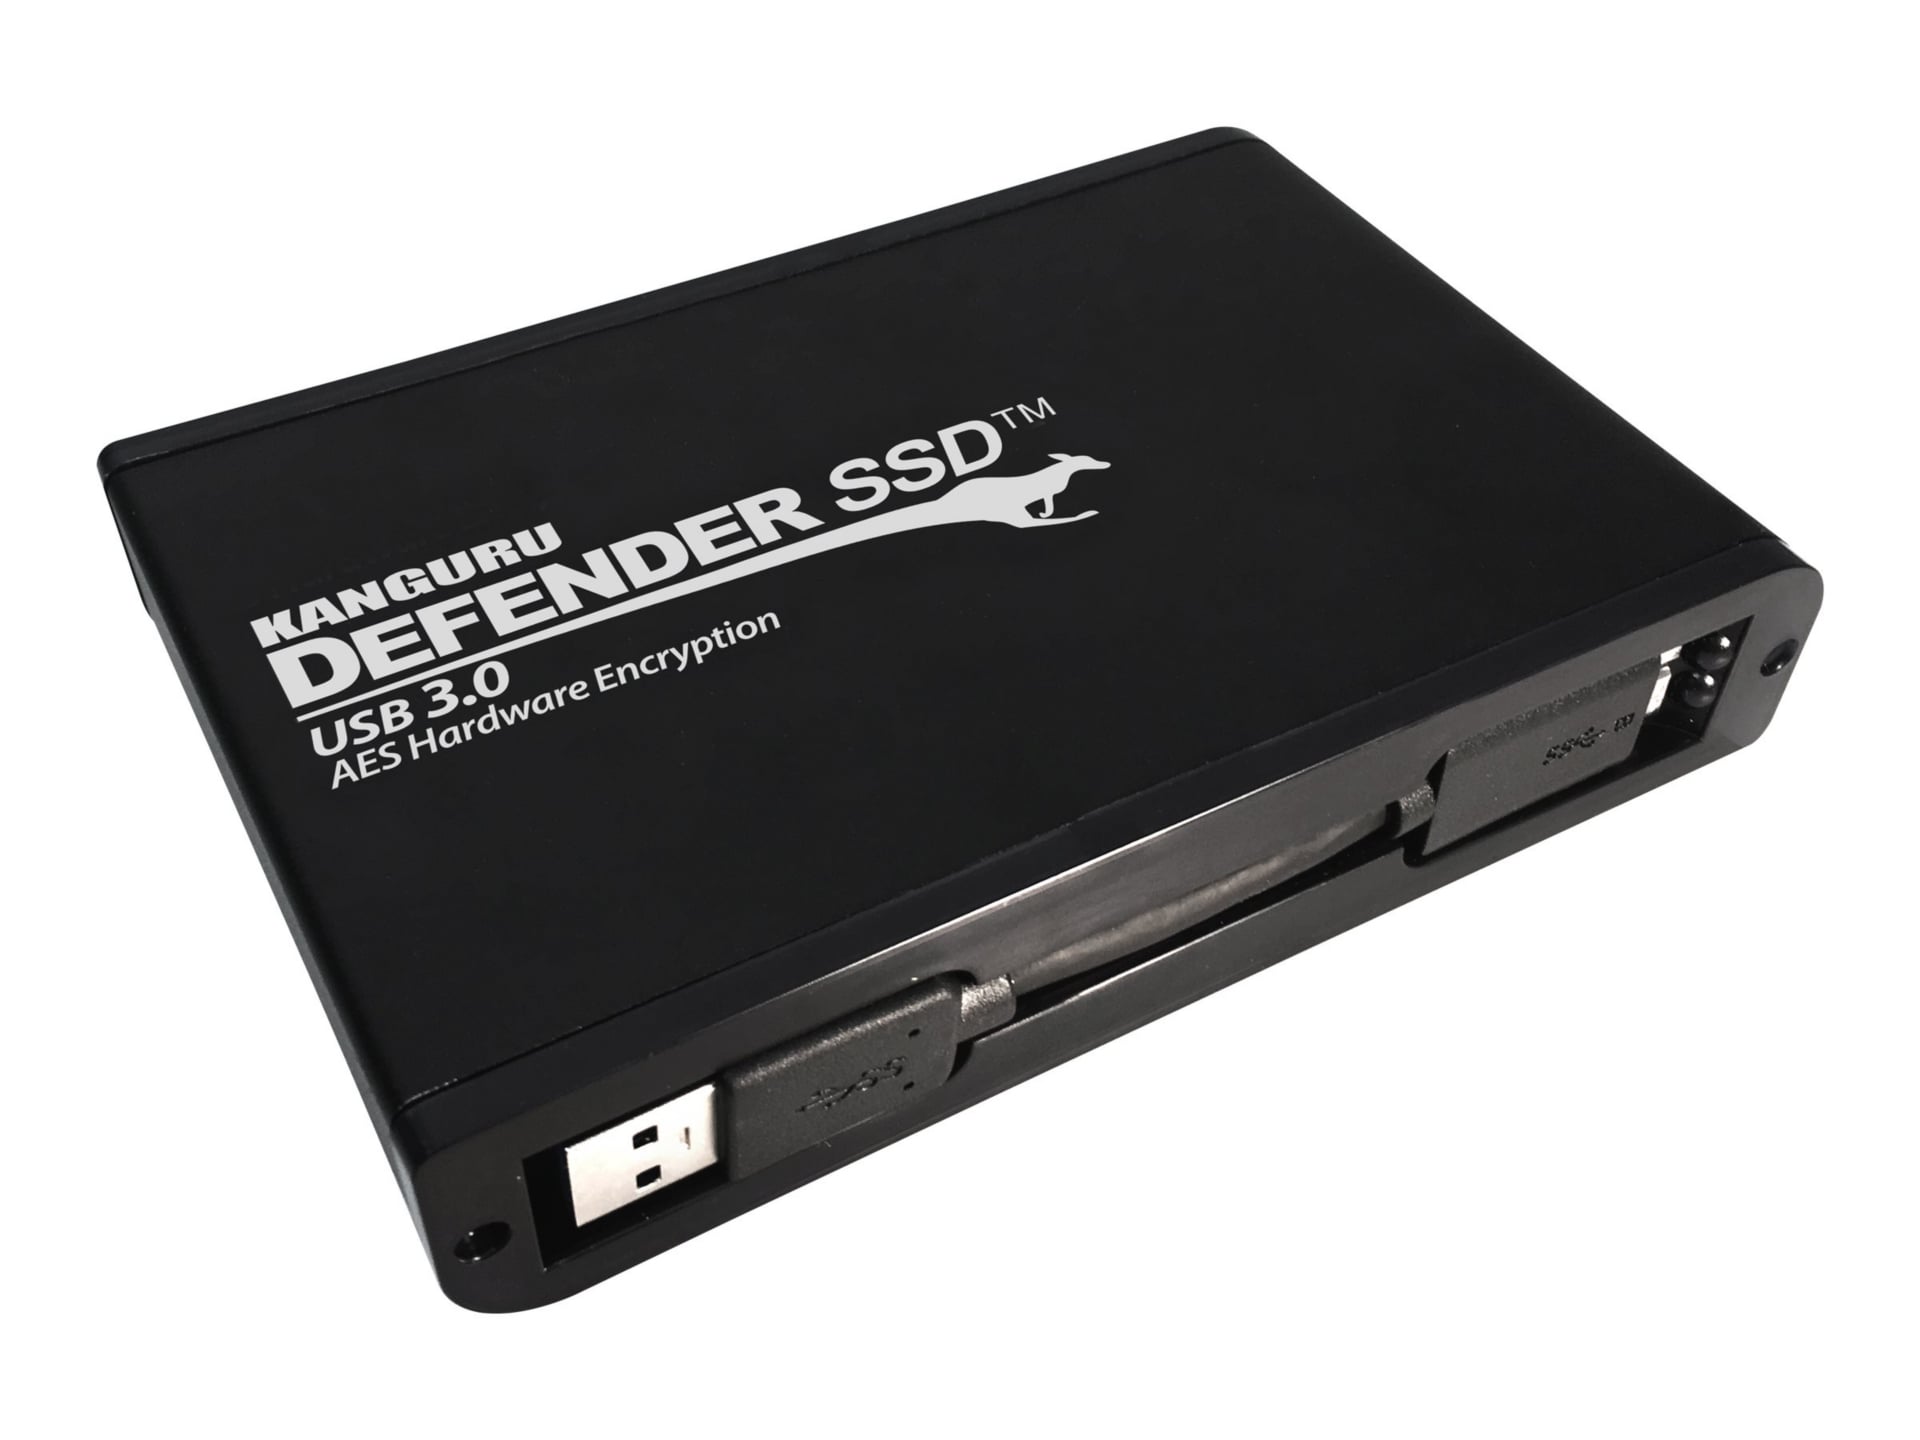 Kanguru Defender HDD 35 Series 2TB Encrypted USB 3.0 Solid State Drive